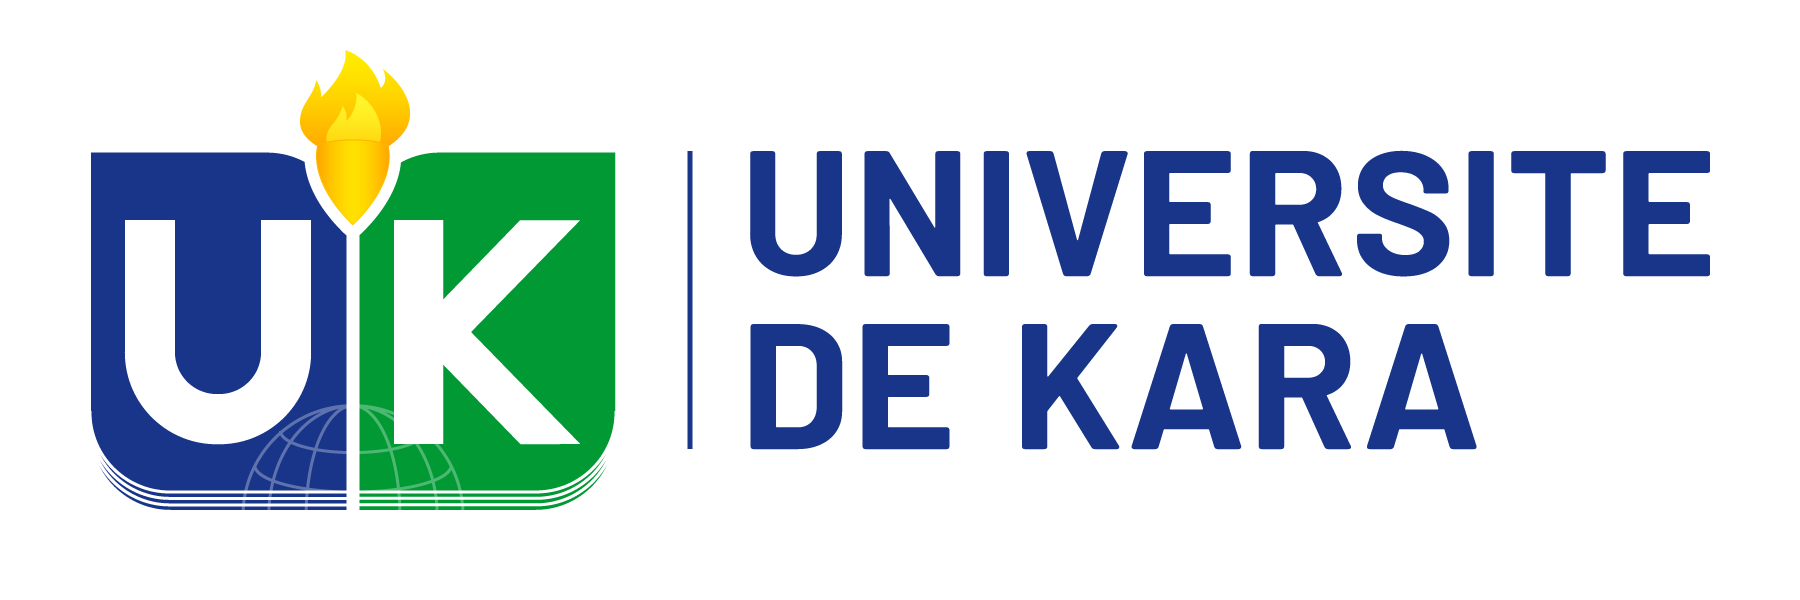 University of Kara